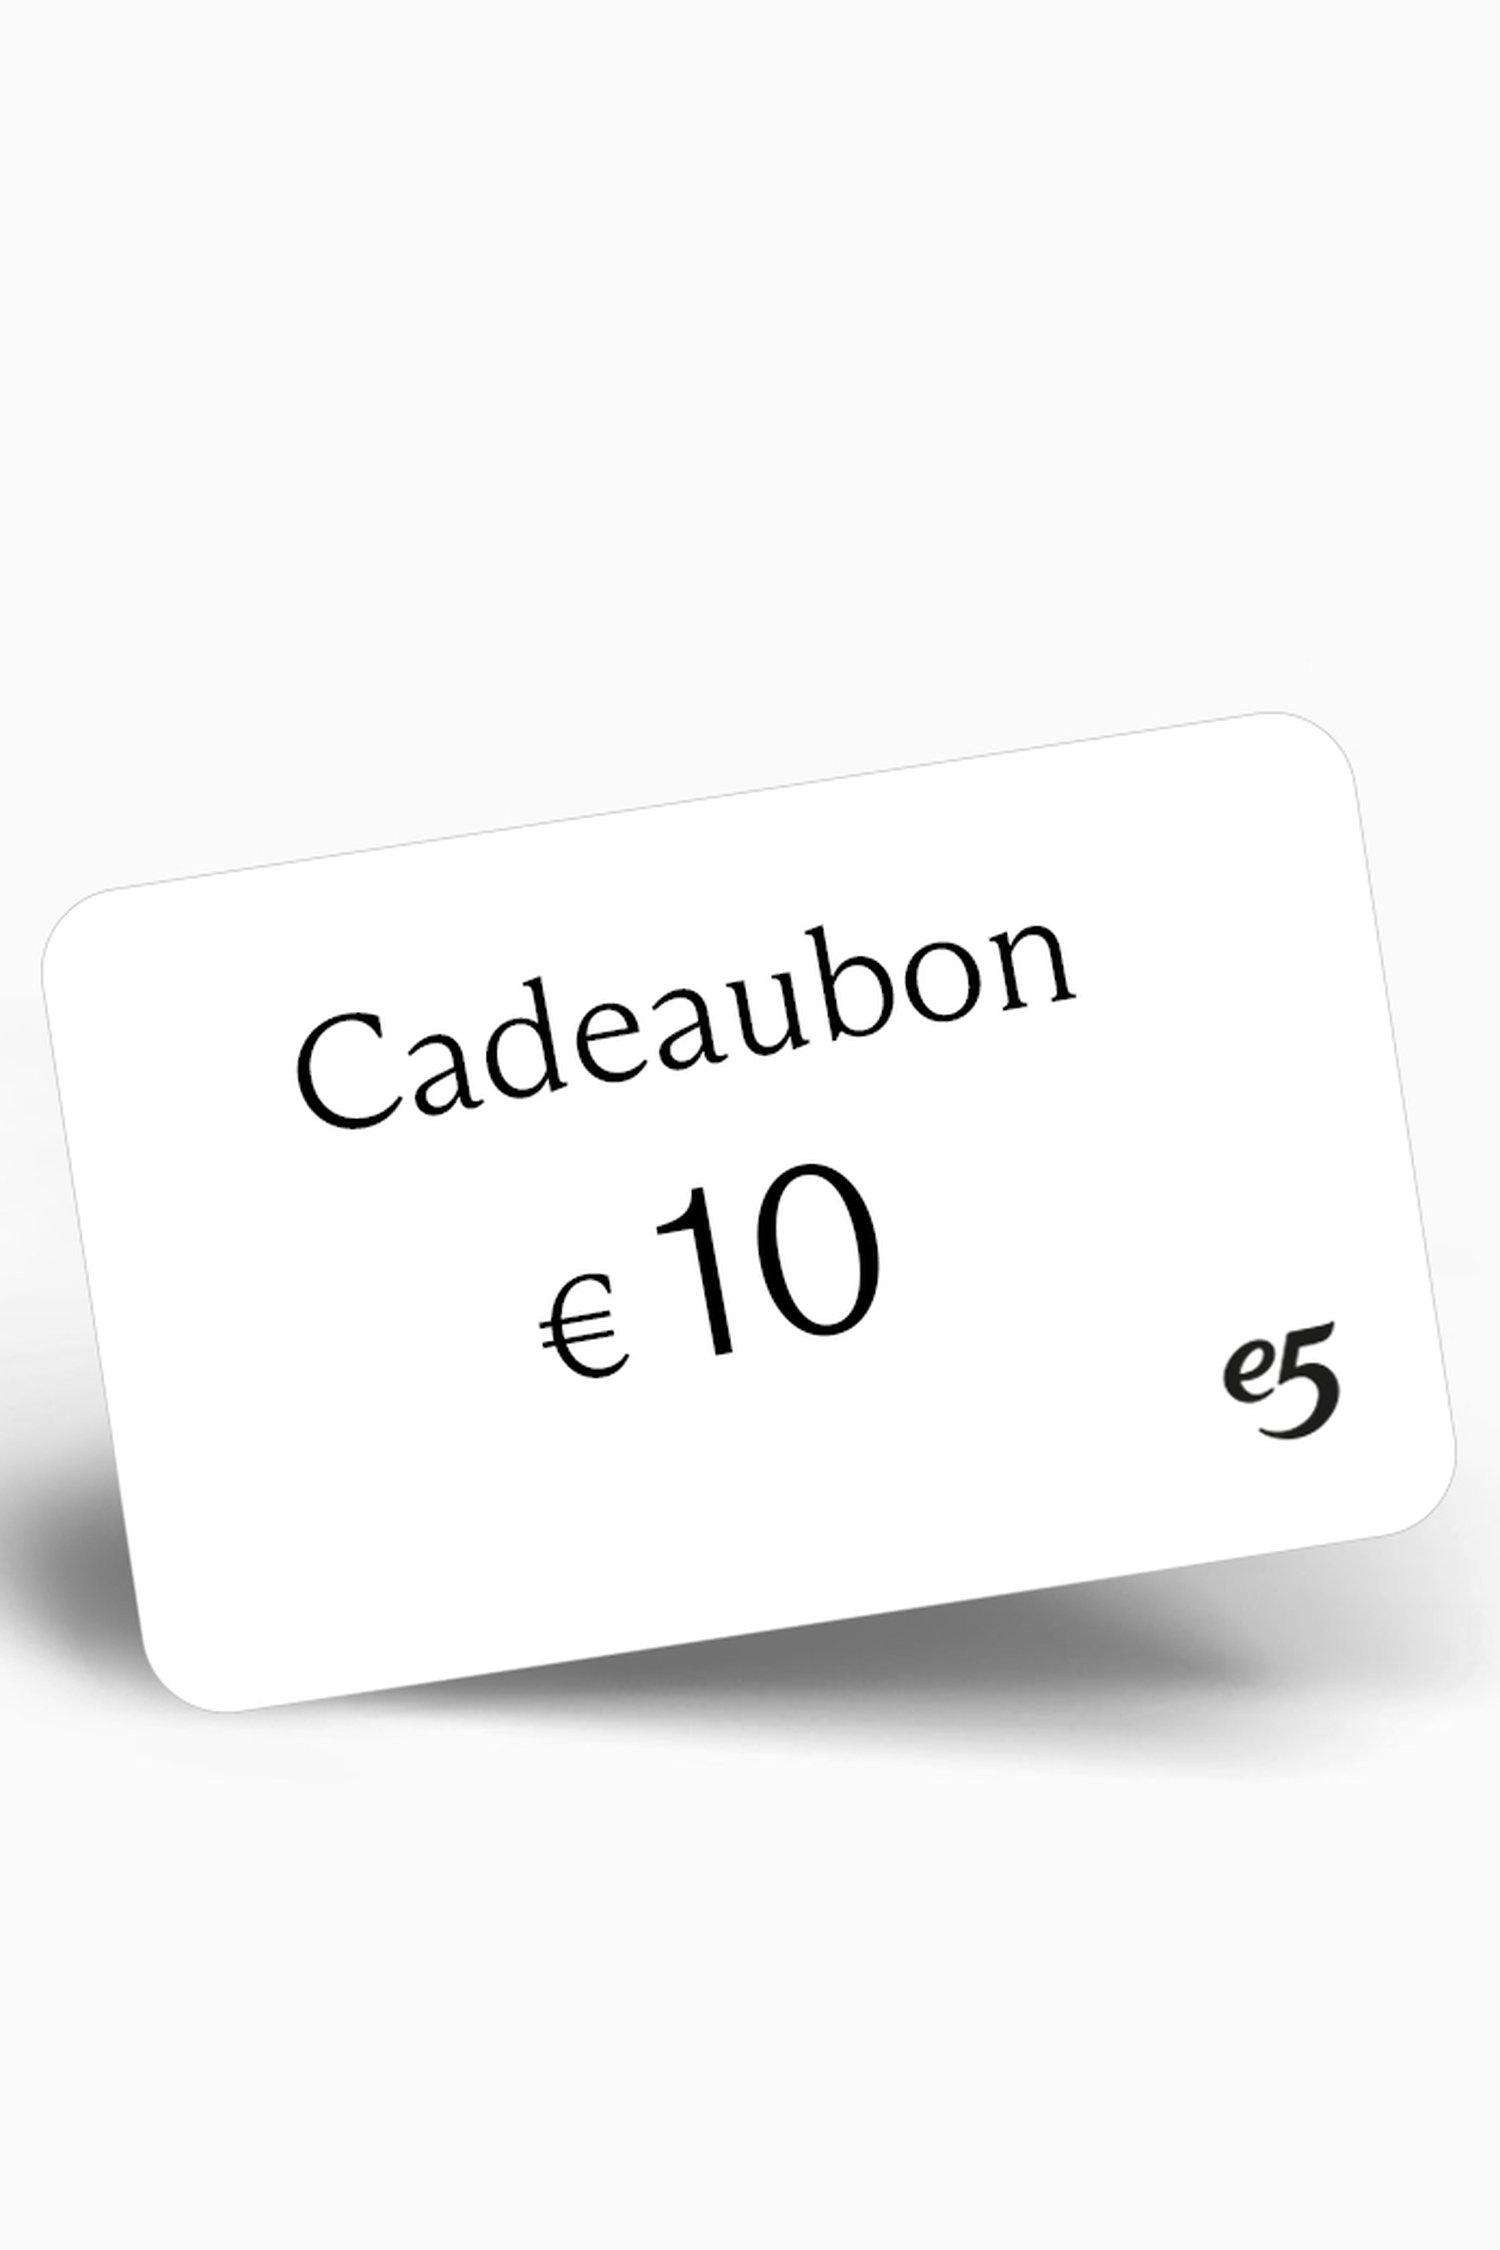 Cadeaubon 10 euro van e5 voor Dames